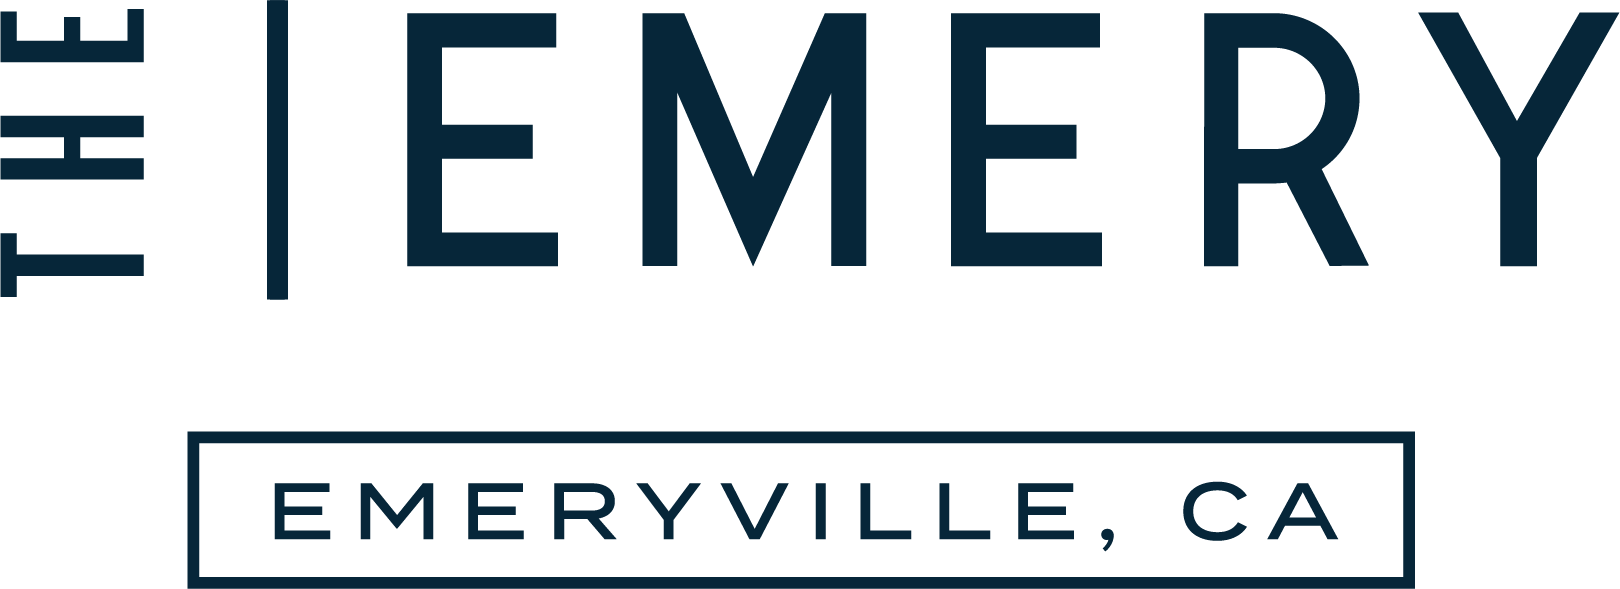 The Emery logo